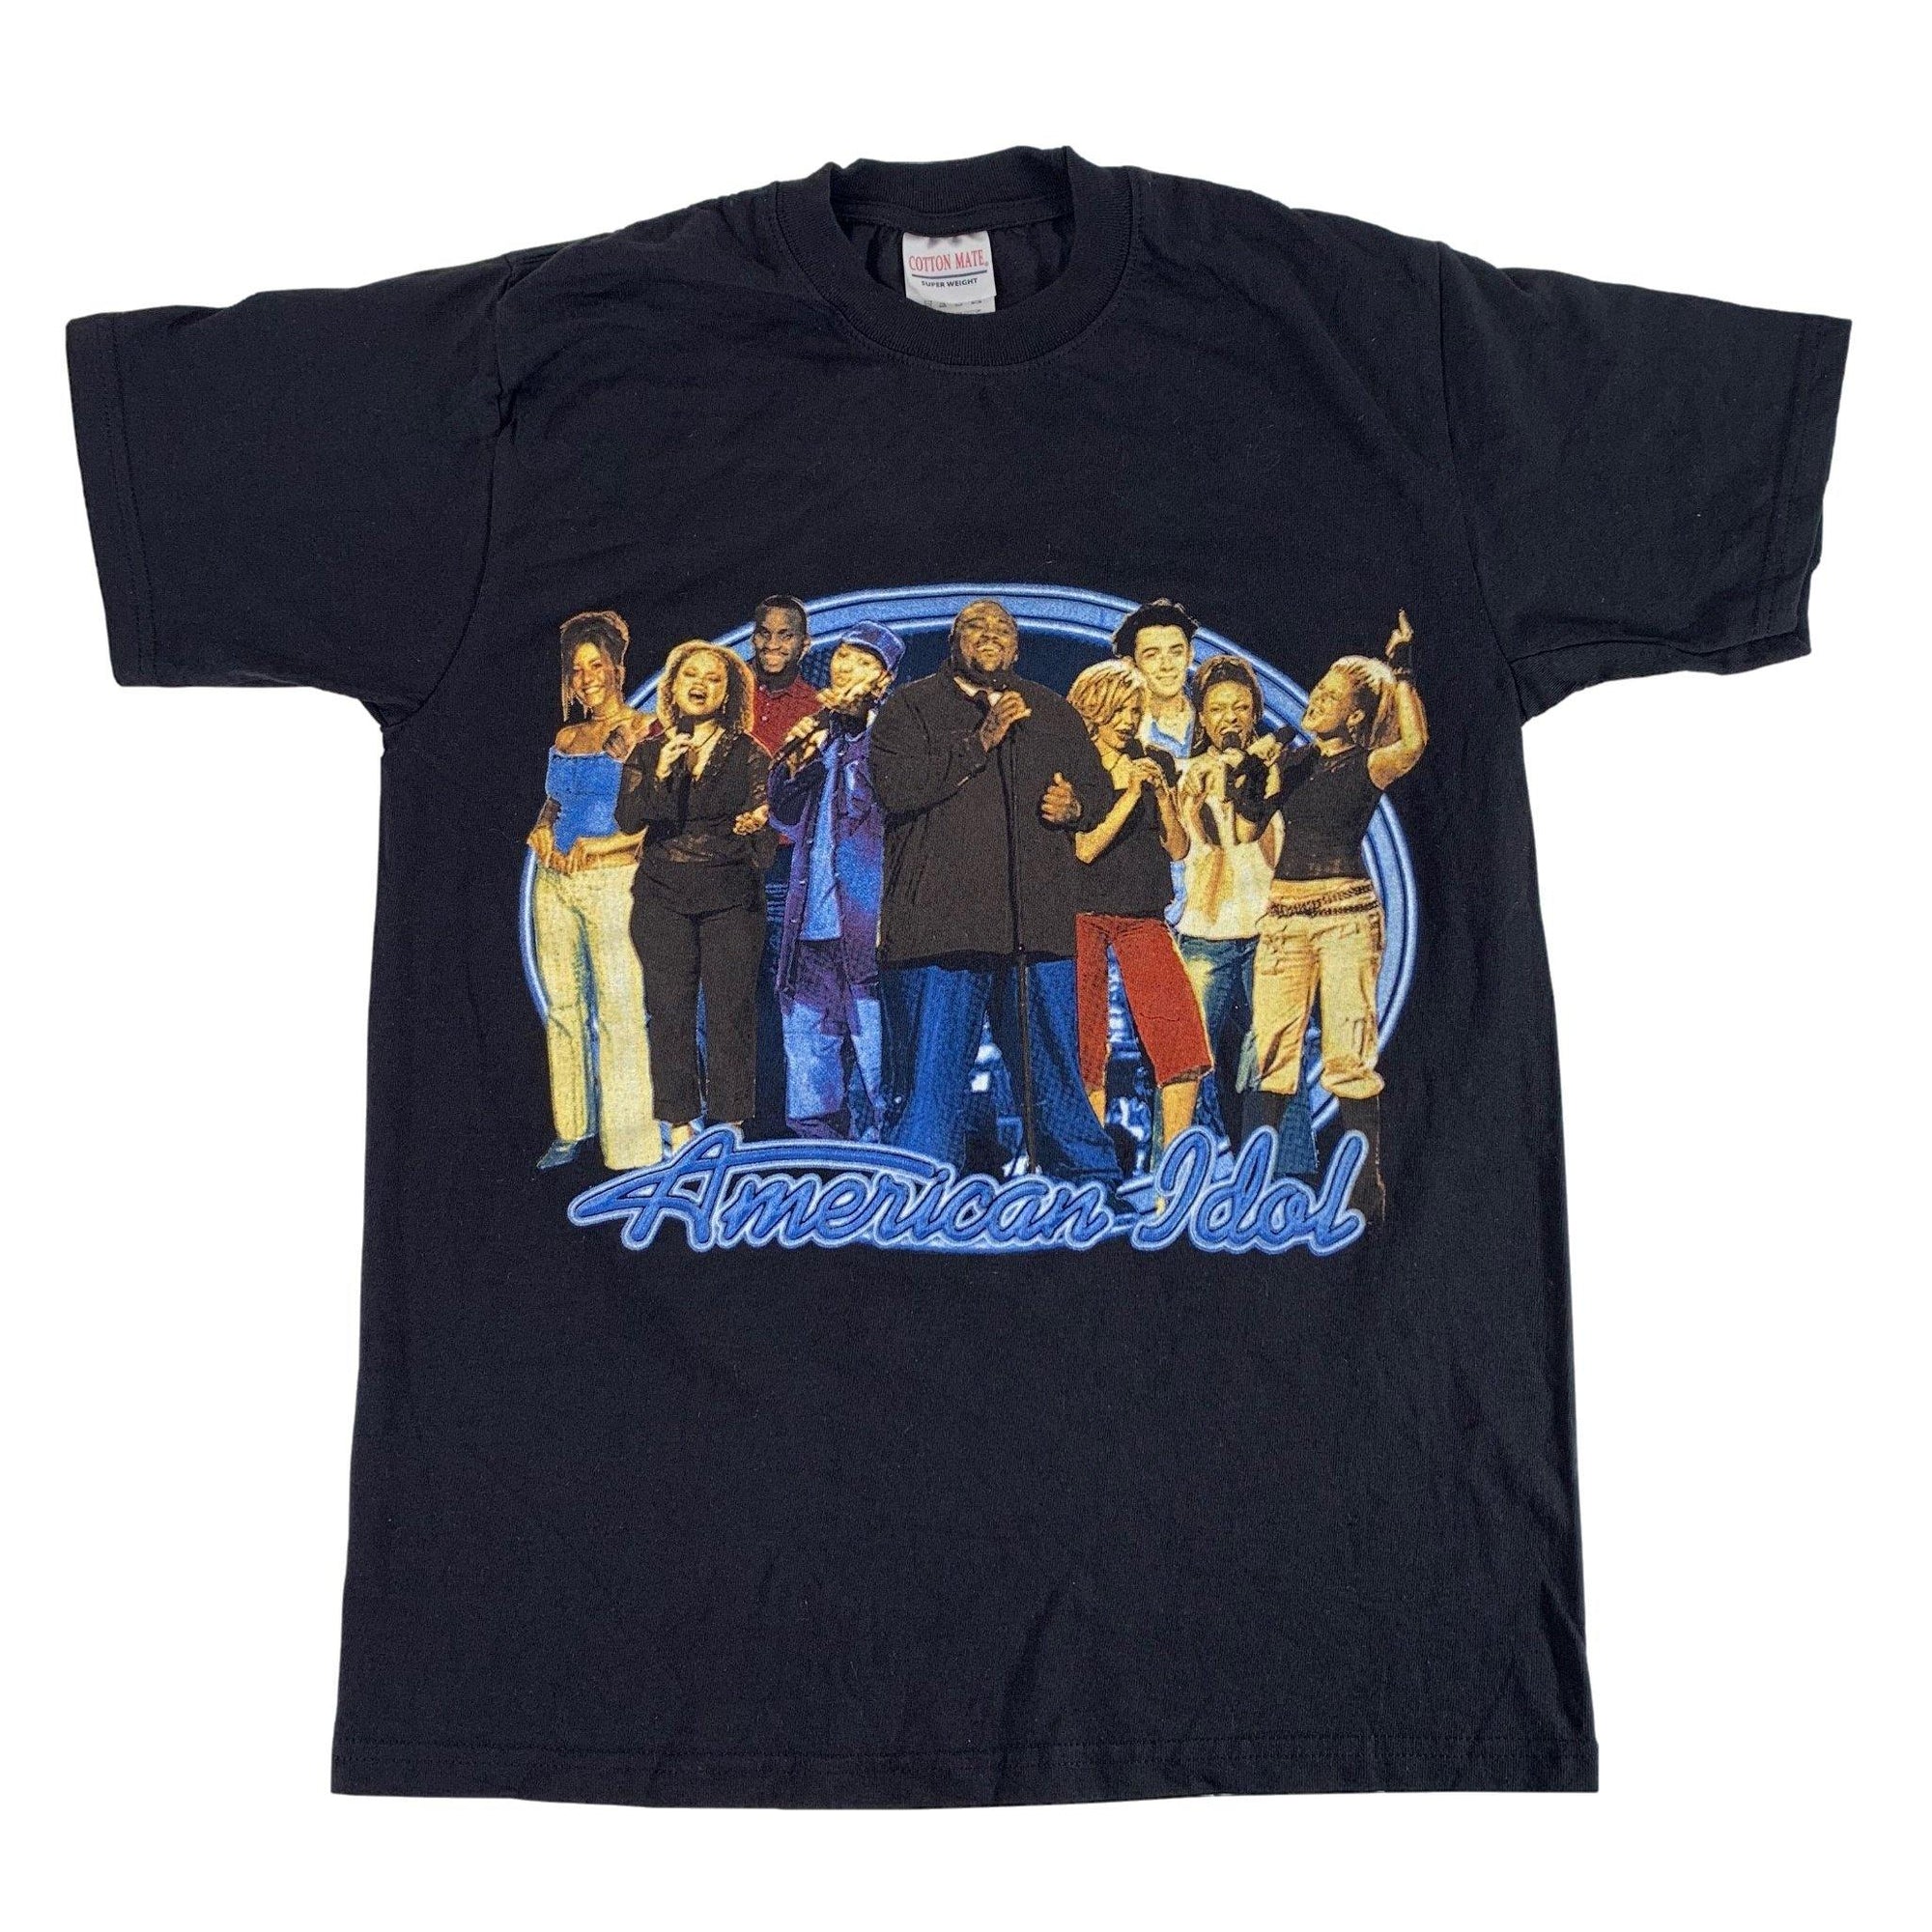 Vintage American Idol "Summer 2003" T-Shirt - jointcustodydc